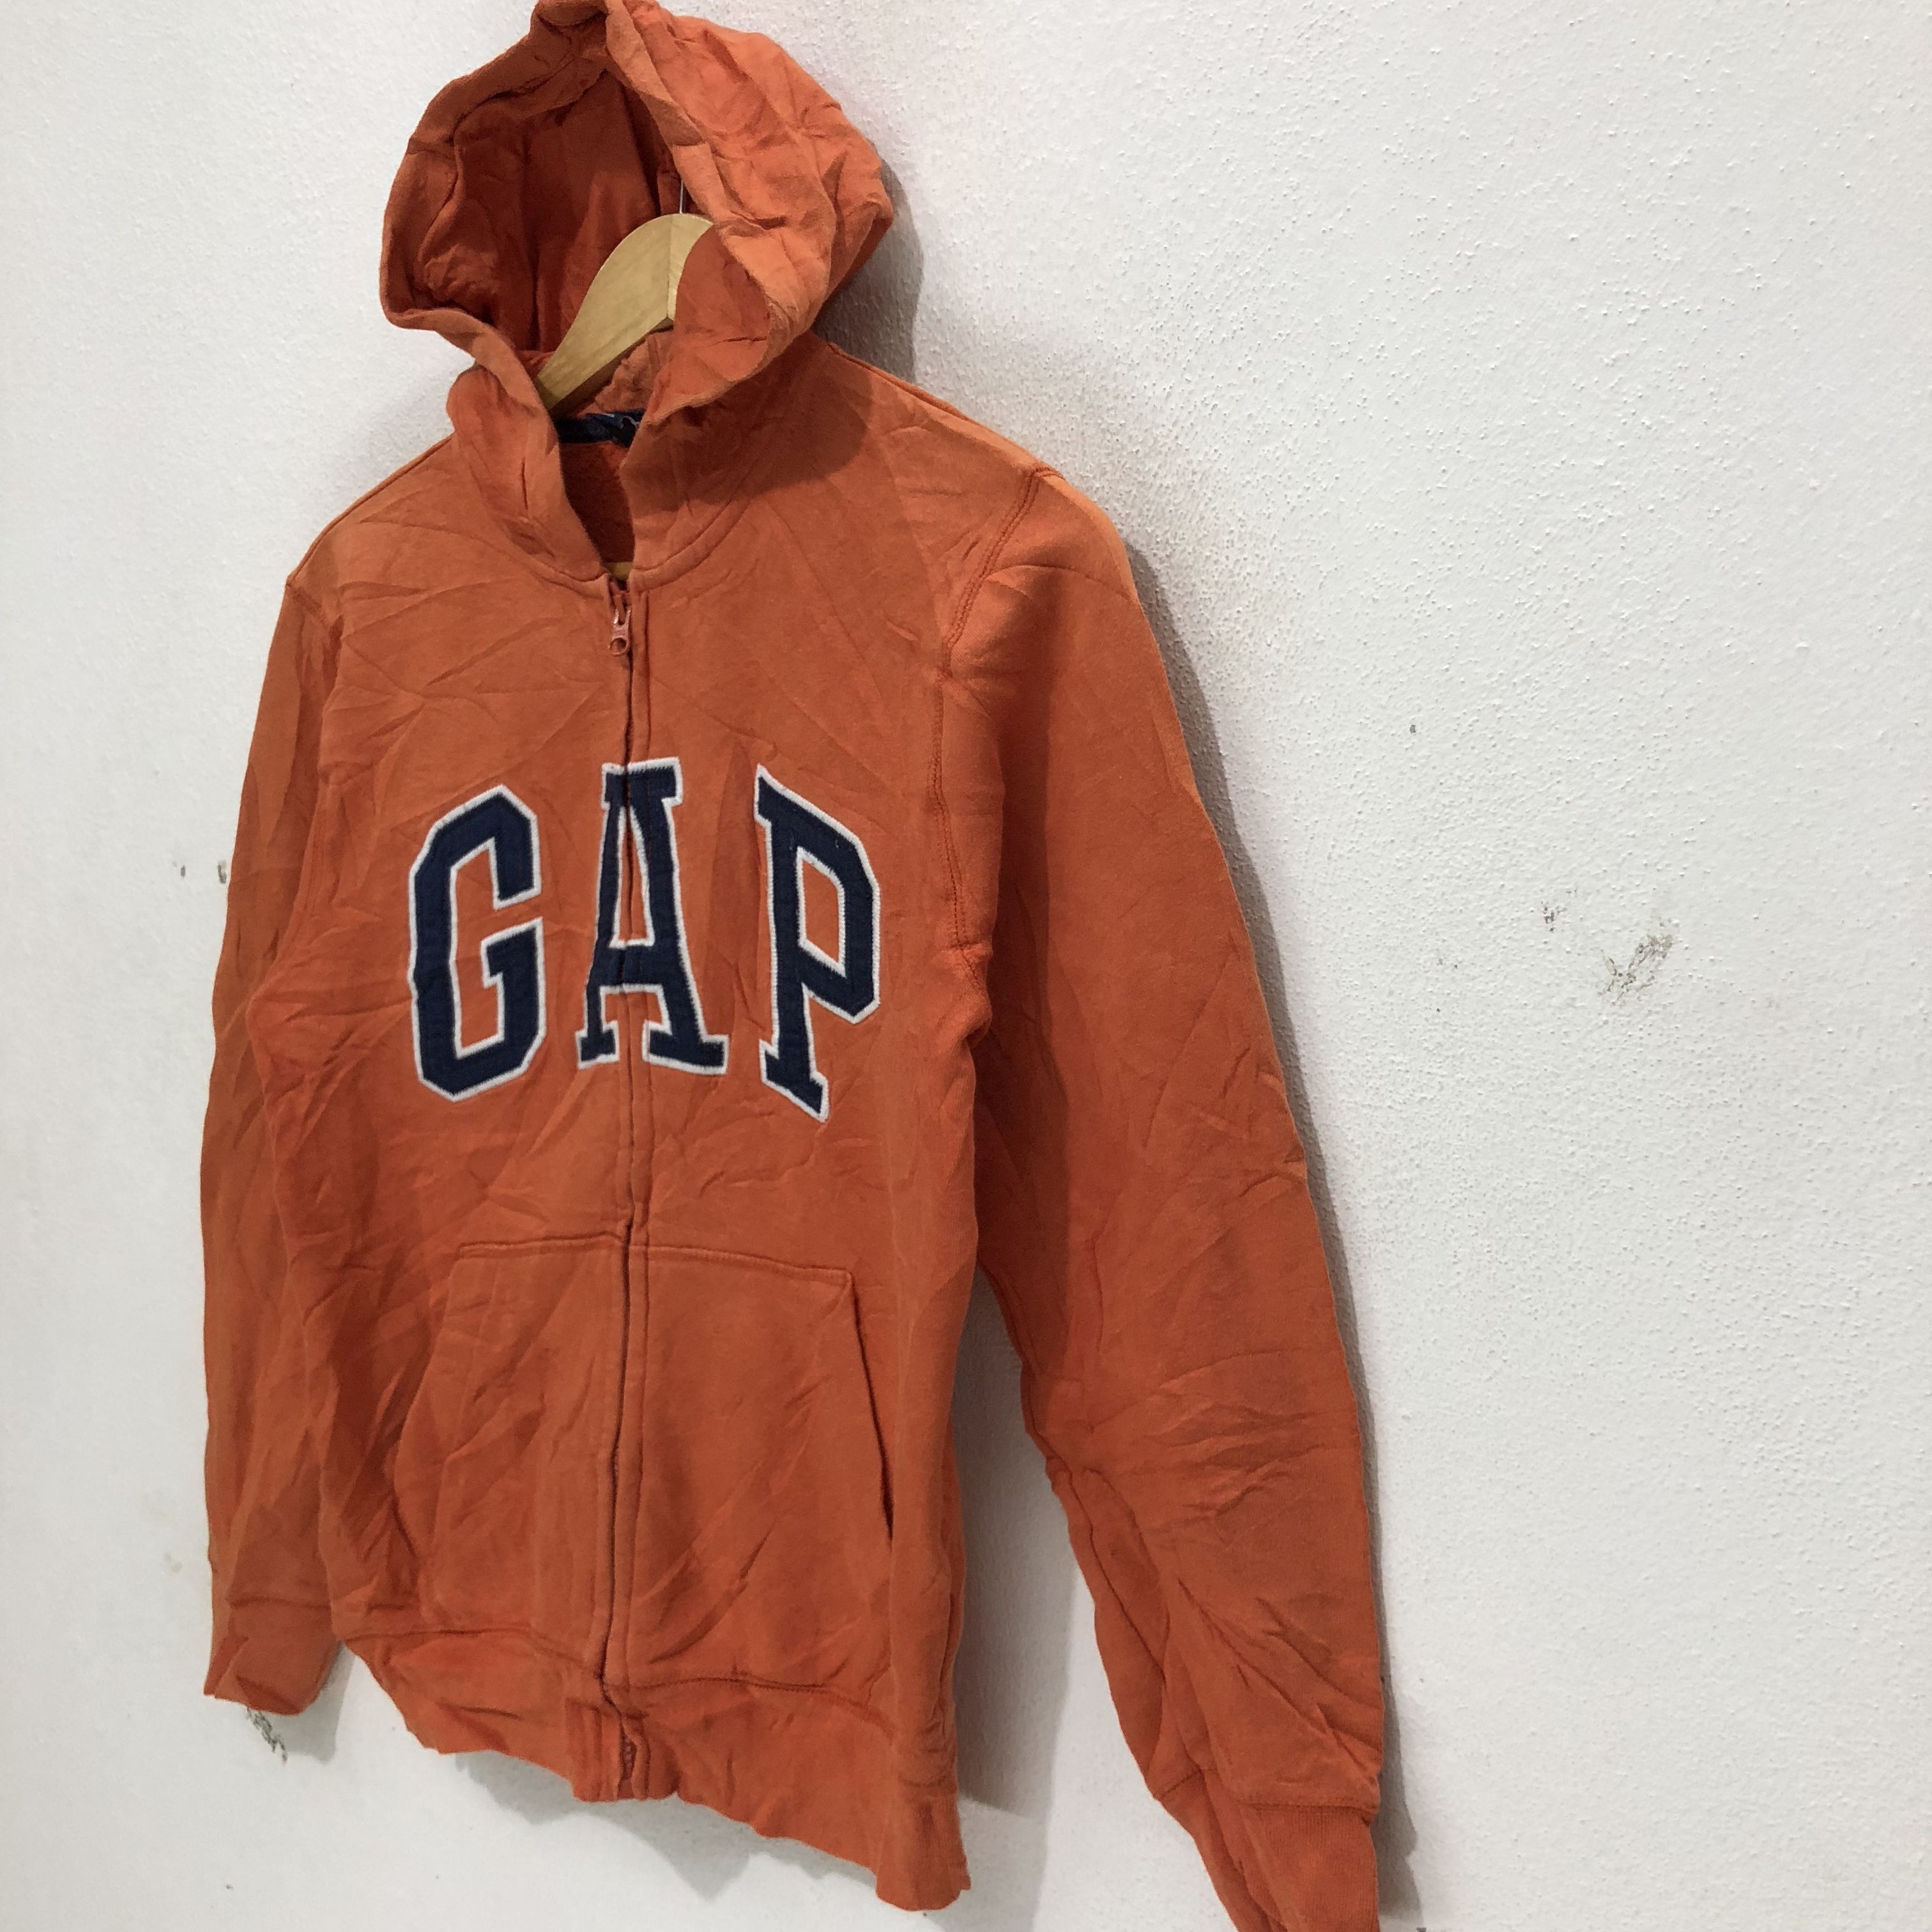 Gap Gap Zip Up Hoodie Sweater Spell Out Orange Sweatshirt Size Large Size US L / EU 52-54 / 3 - 3 Thumbnail